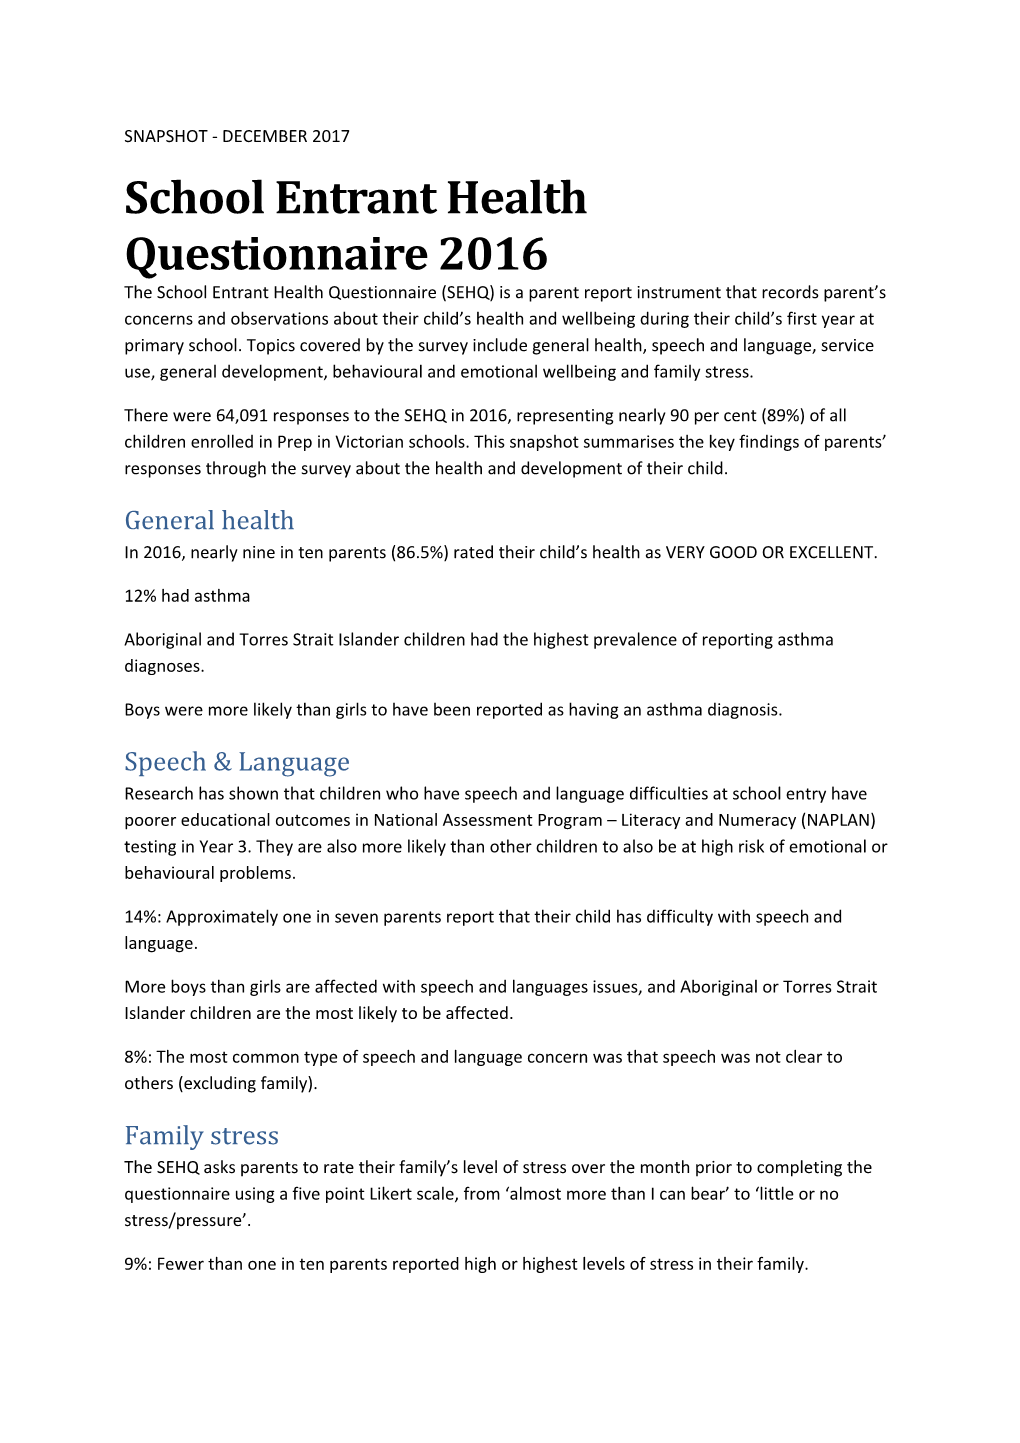 School Entrant Health Questionnaire 2016